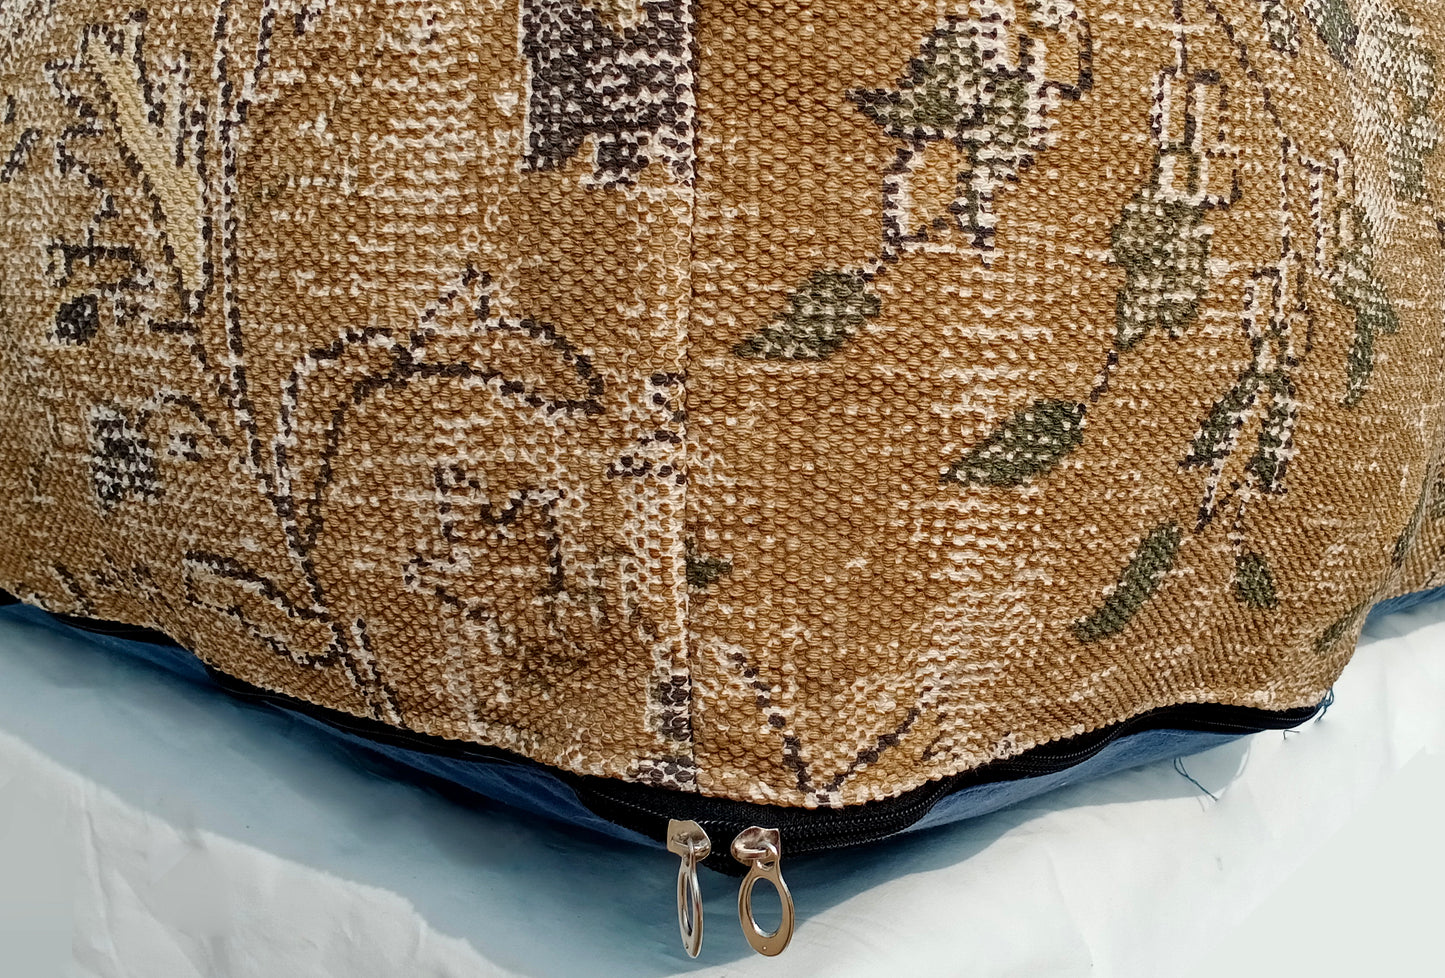 Ottoman / bean bag - Ds14 - The Teal Thread